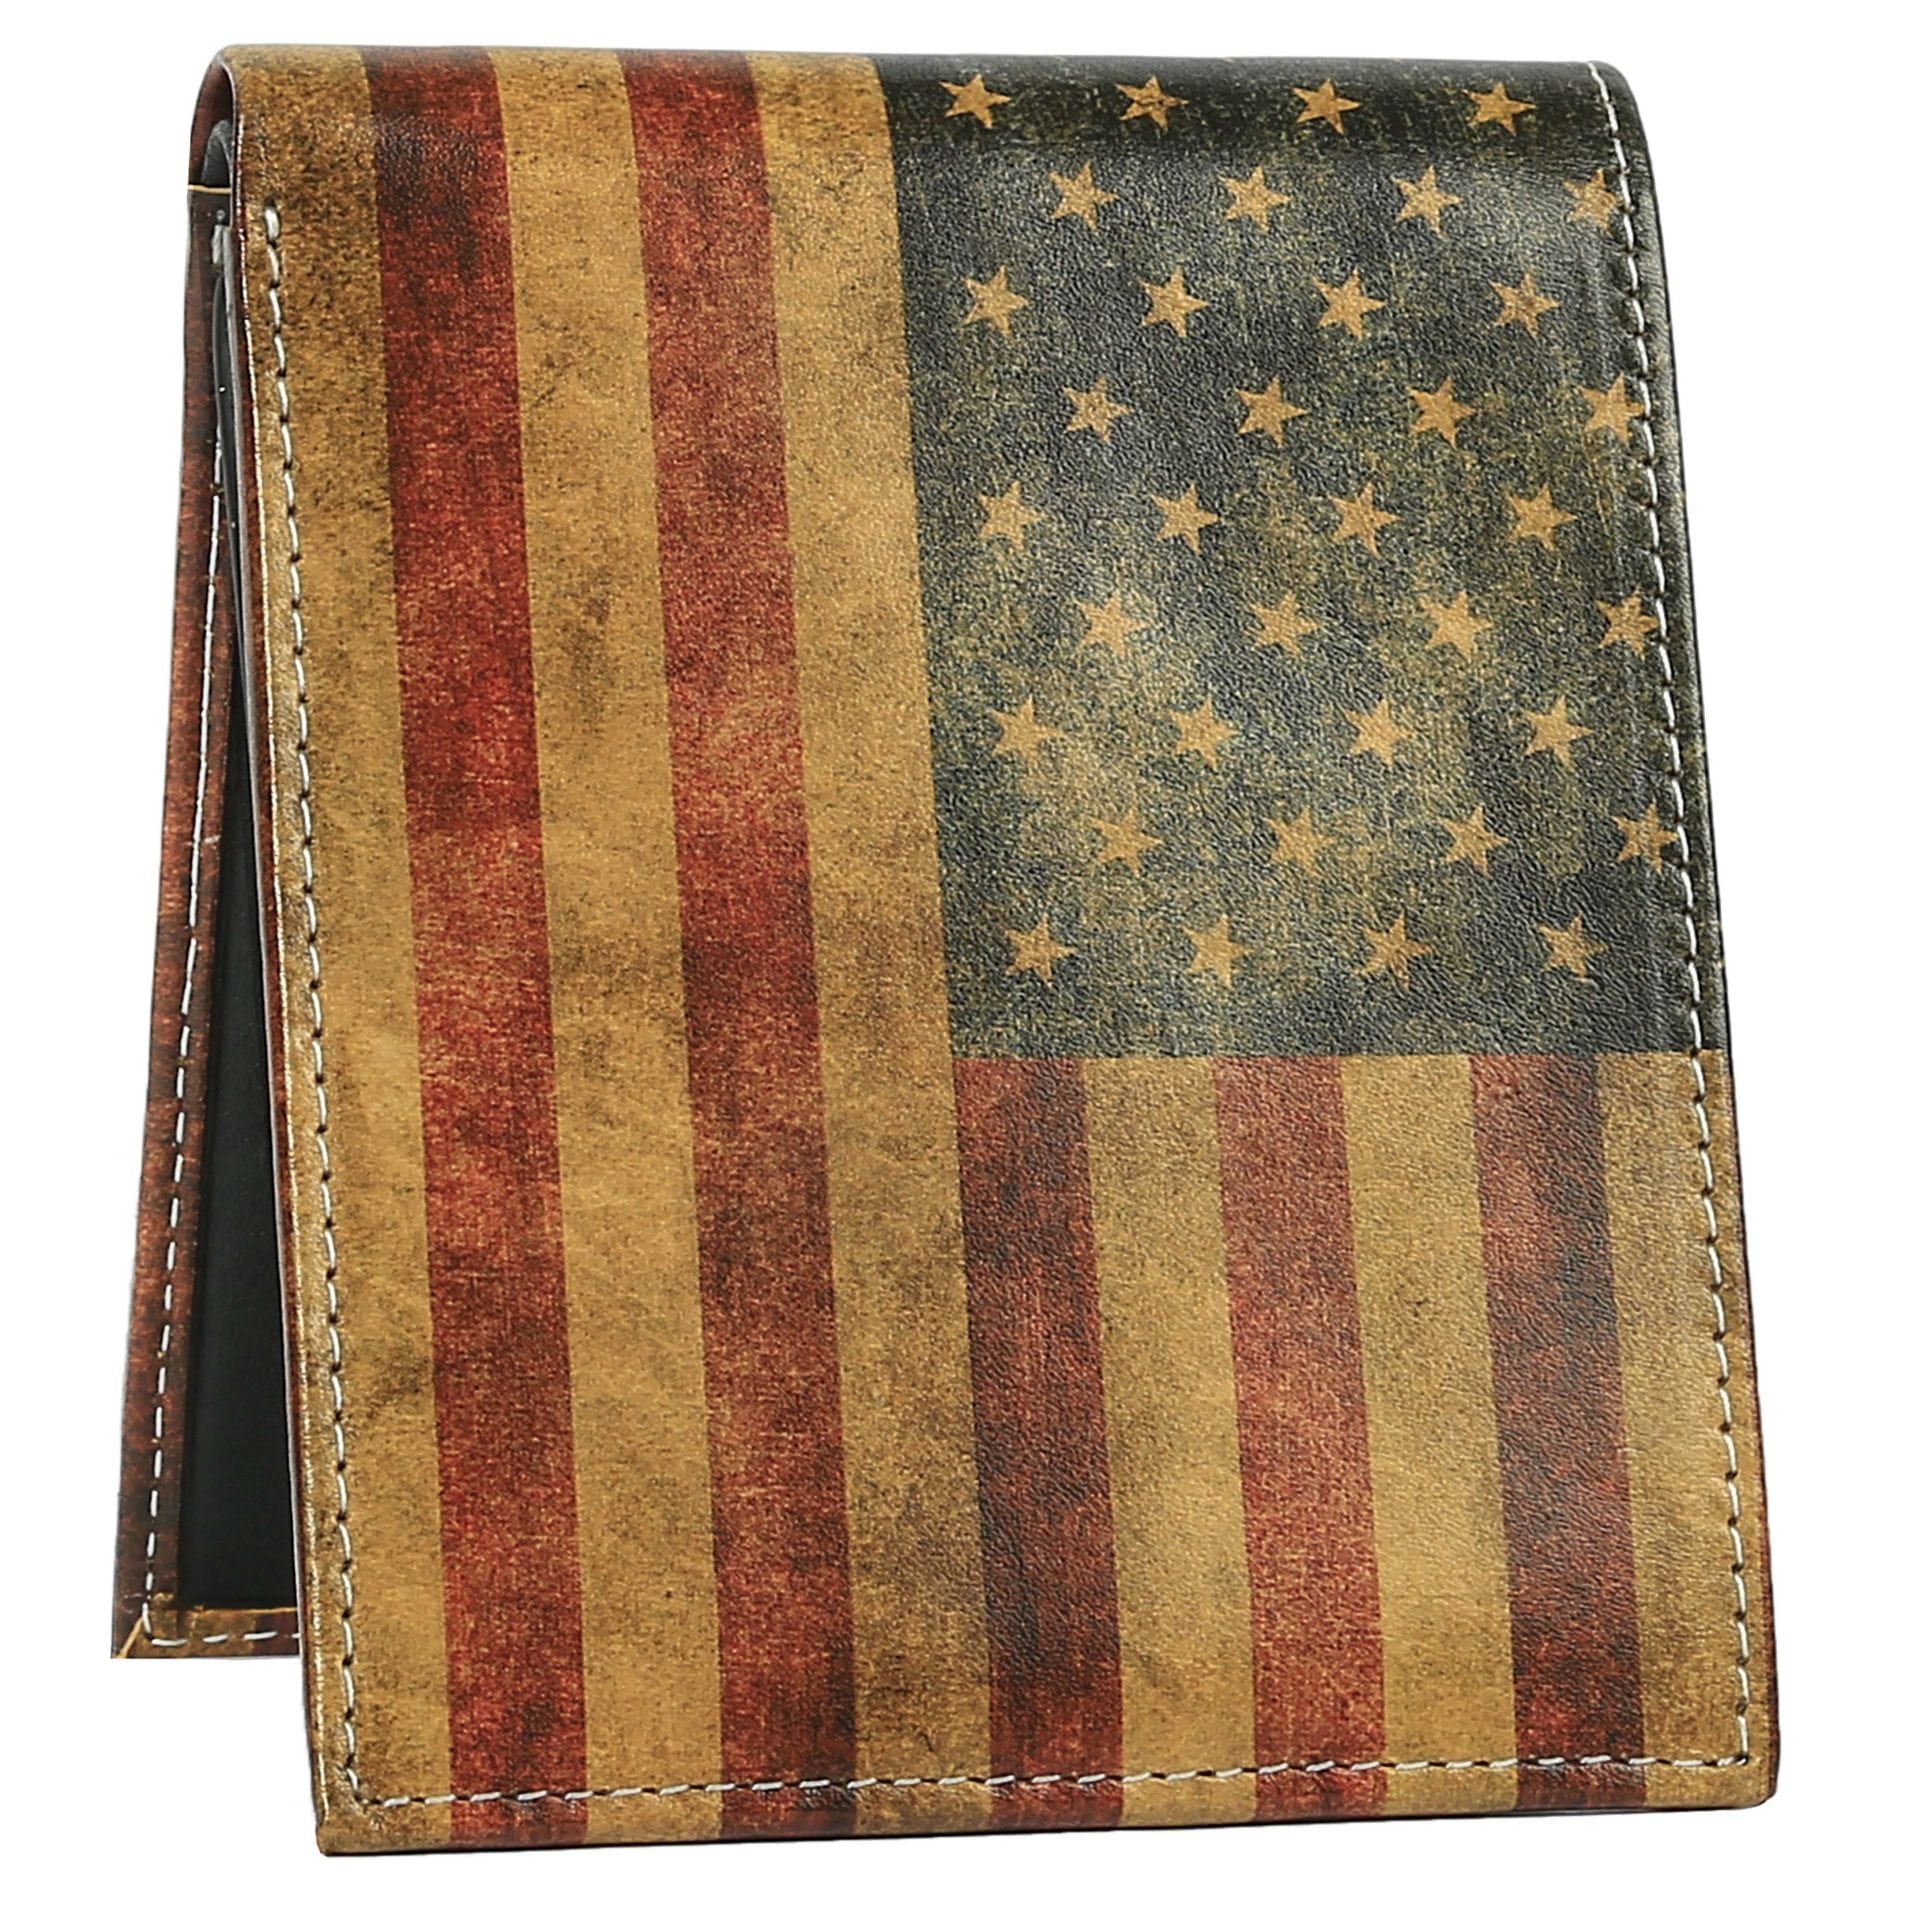 Home Bay American Flag Design Billfold Canvas Wallet